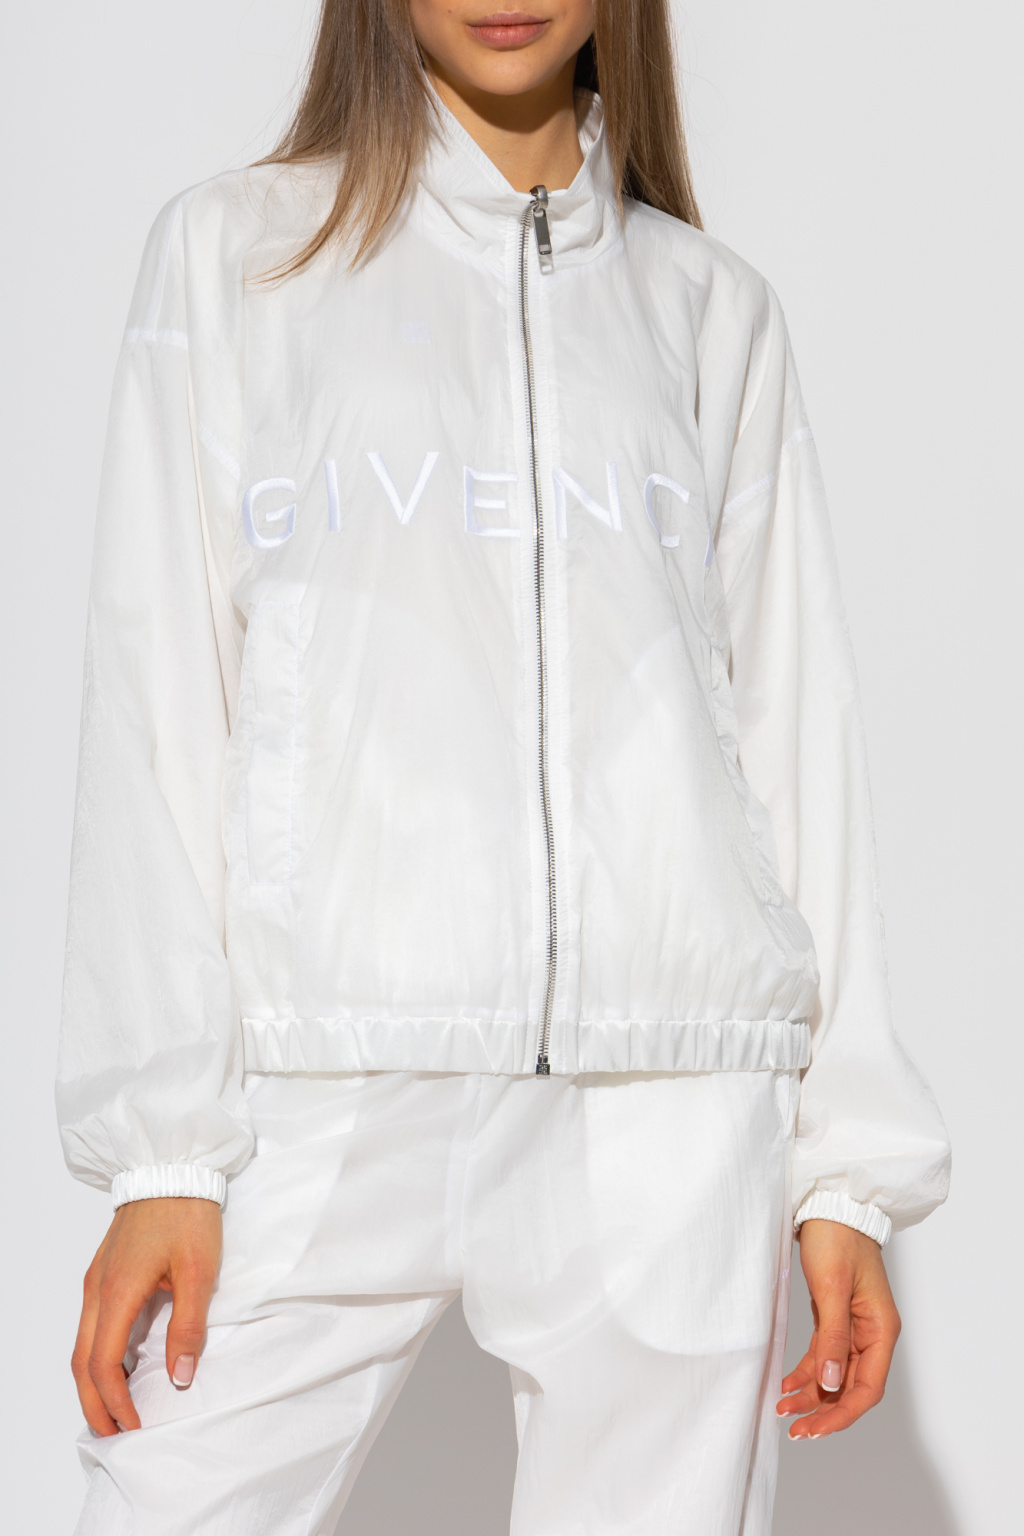 Givenchy strap jacket